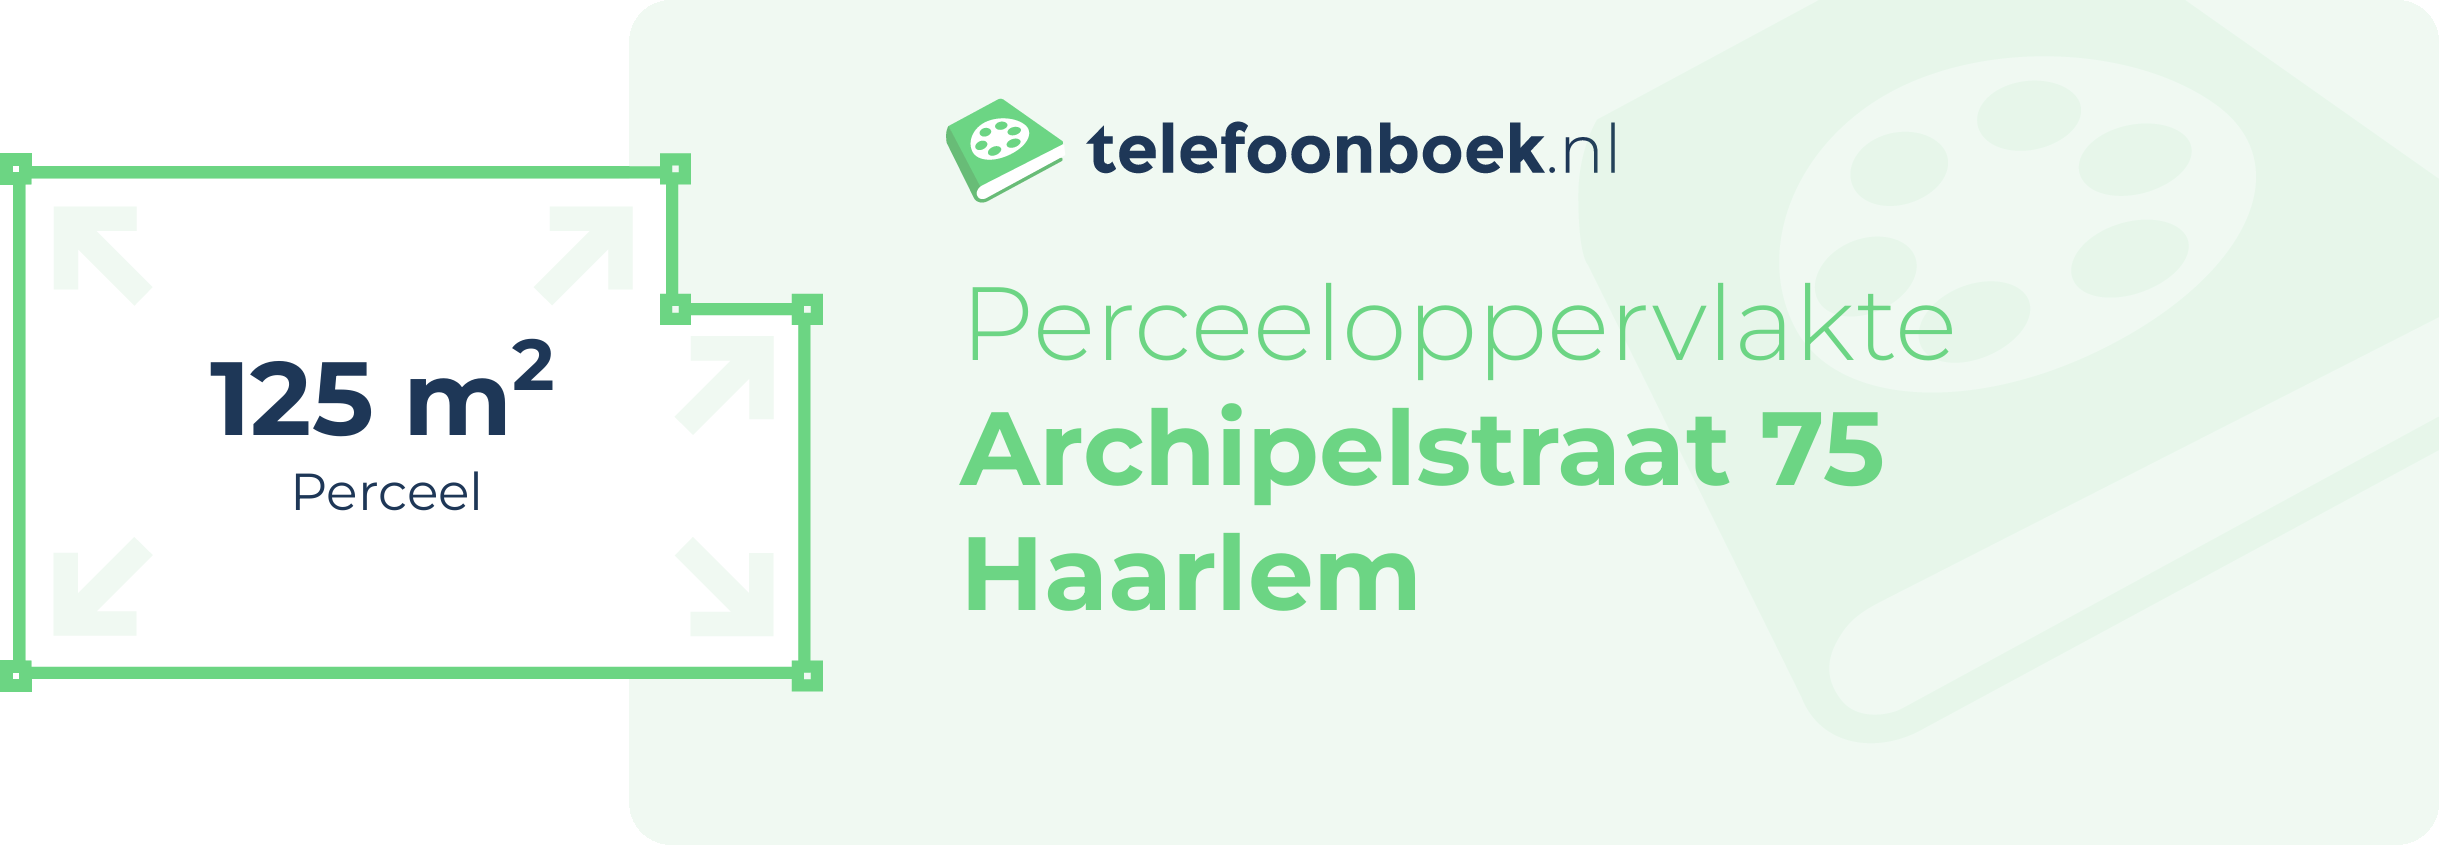 Perceeloppervlakte Archipelstraat 75 Haarlem